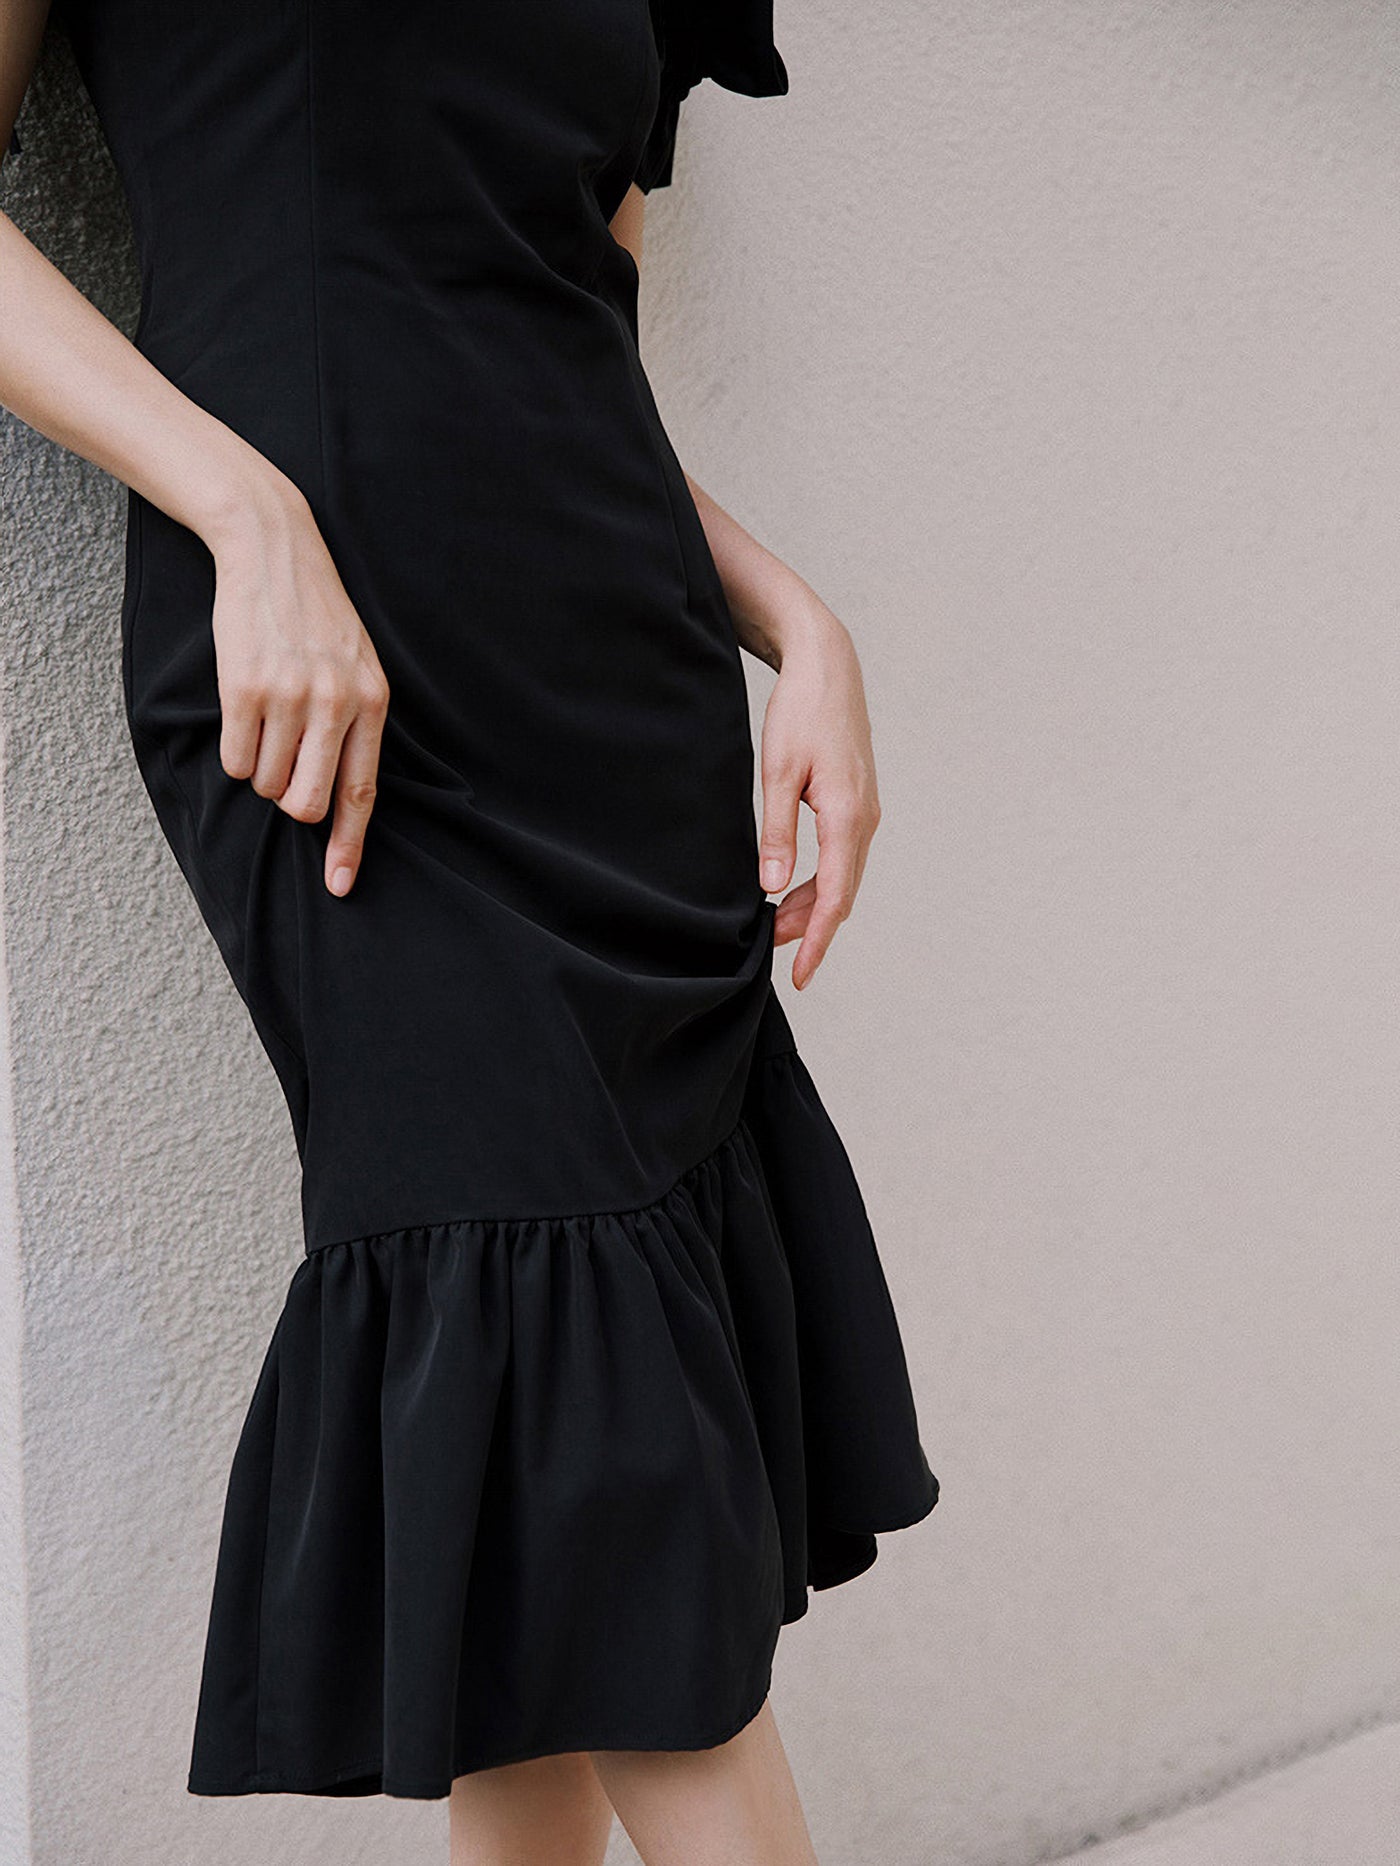 Ruffled off-shoulder black midi dress 